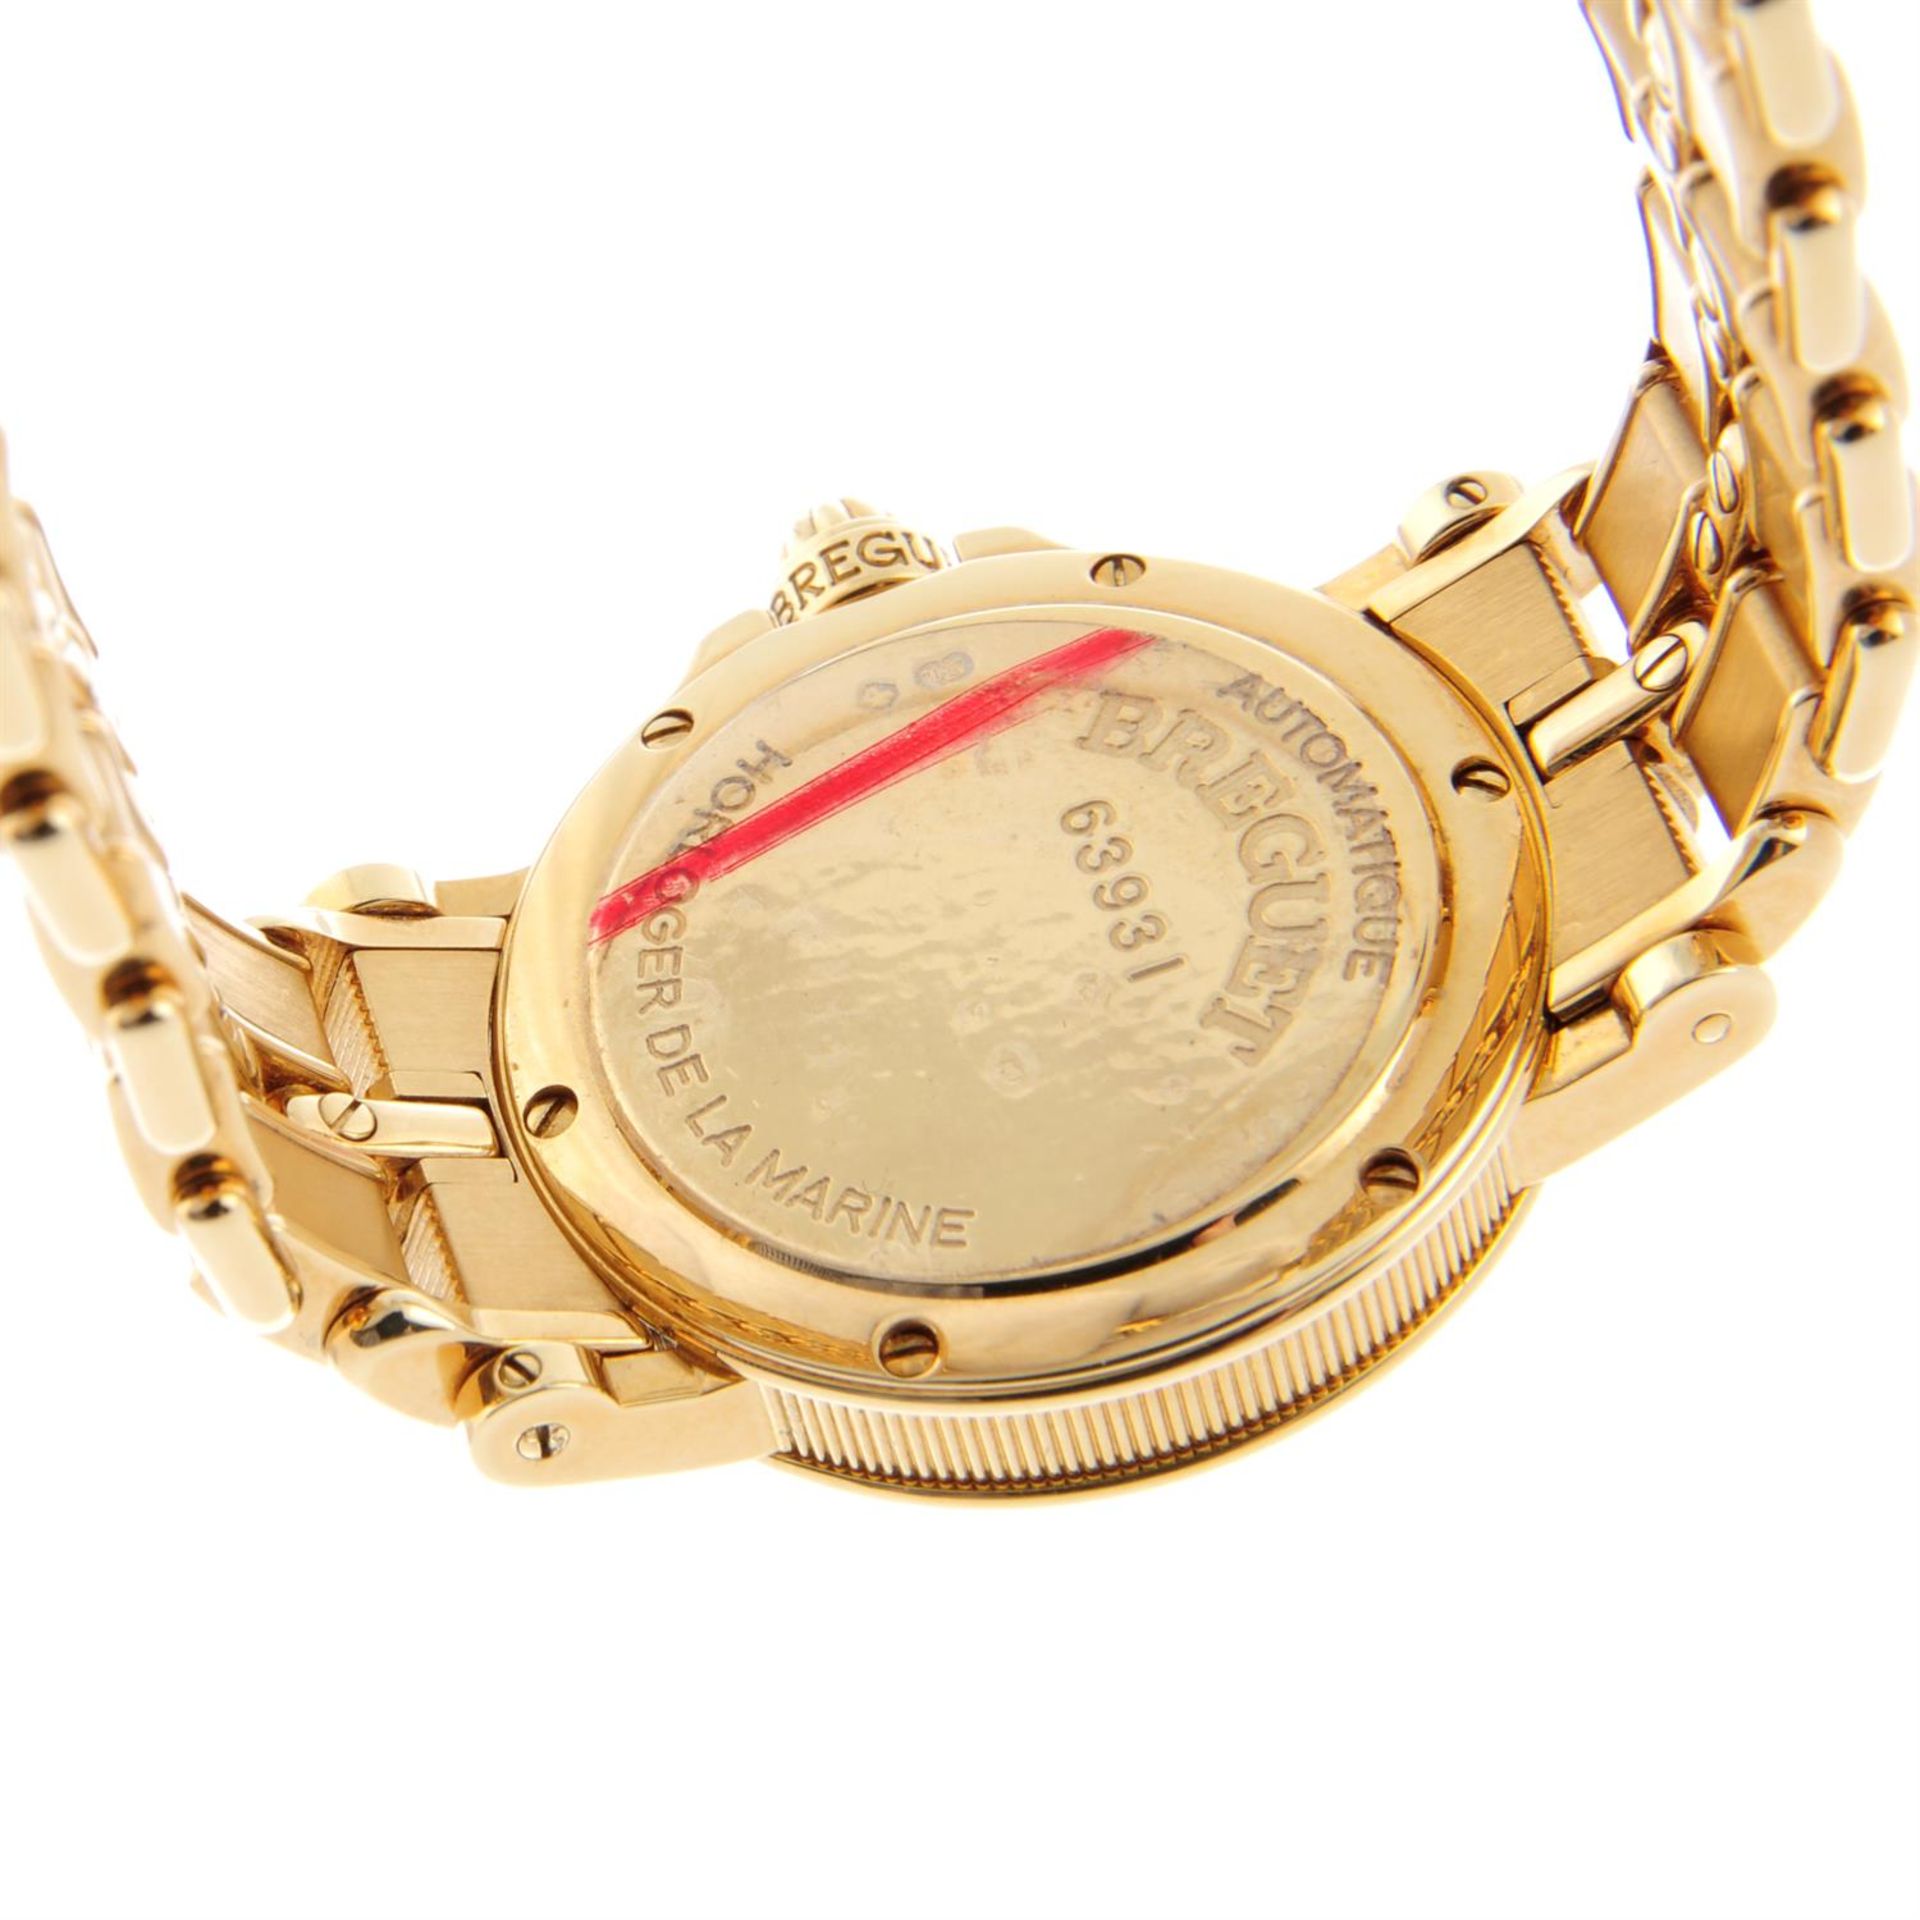 BREGUET - a diamond set 18ct yellow gold Horloger De La Marine bracelet watch, 26mm. - Image 5 of 7